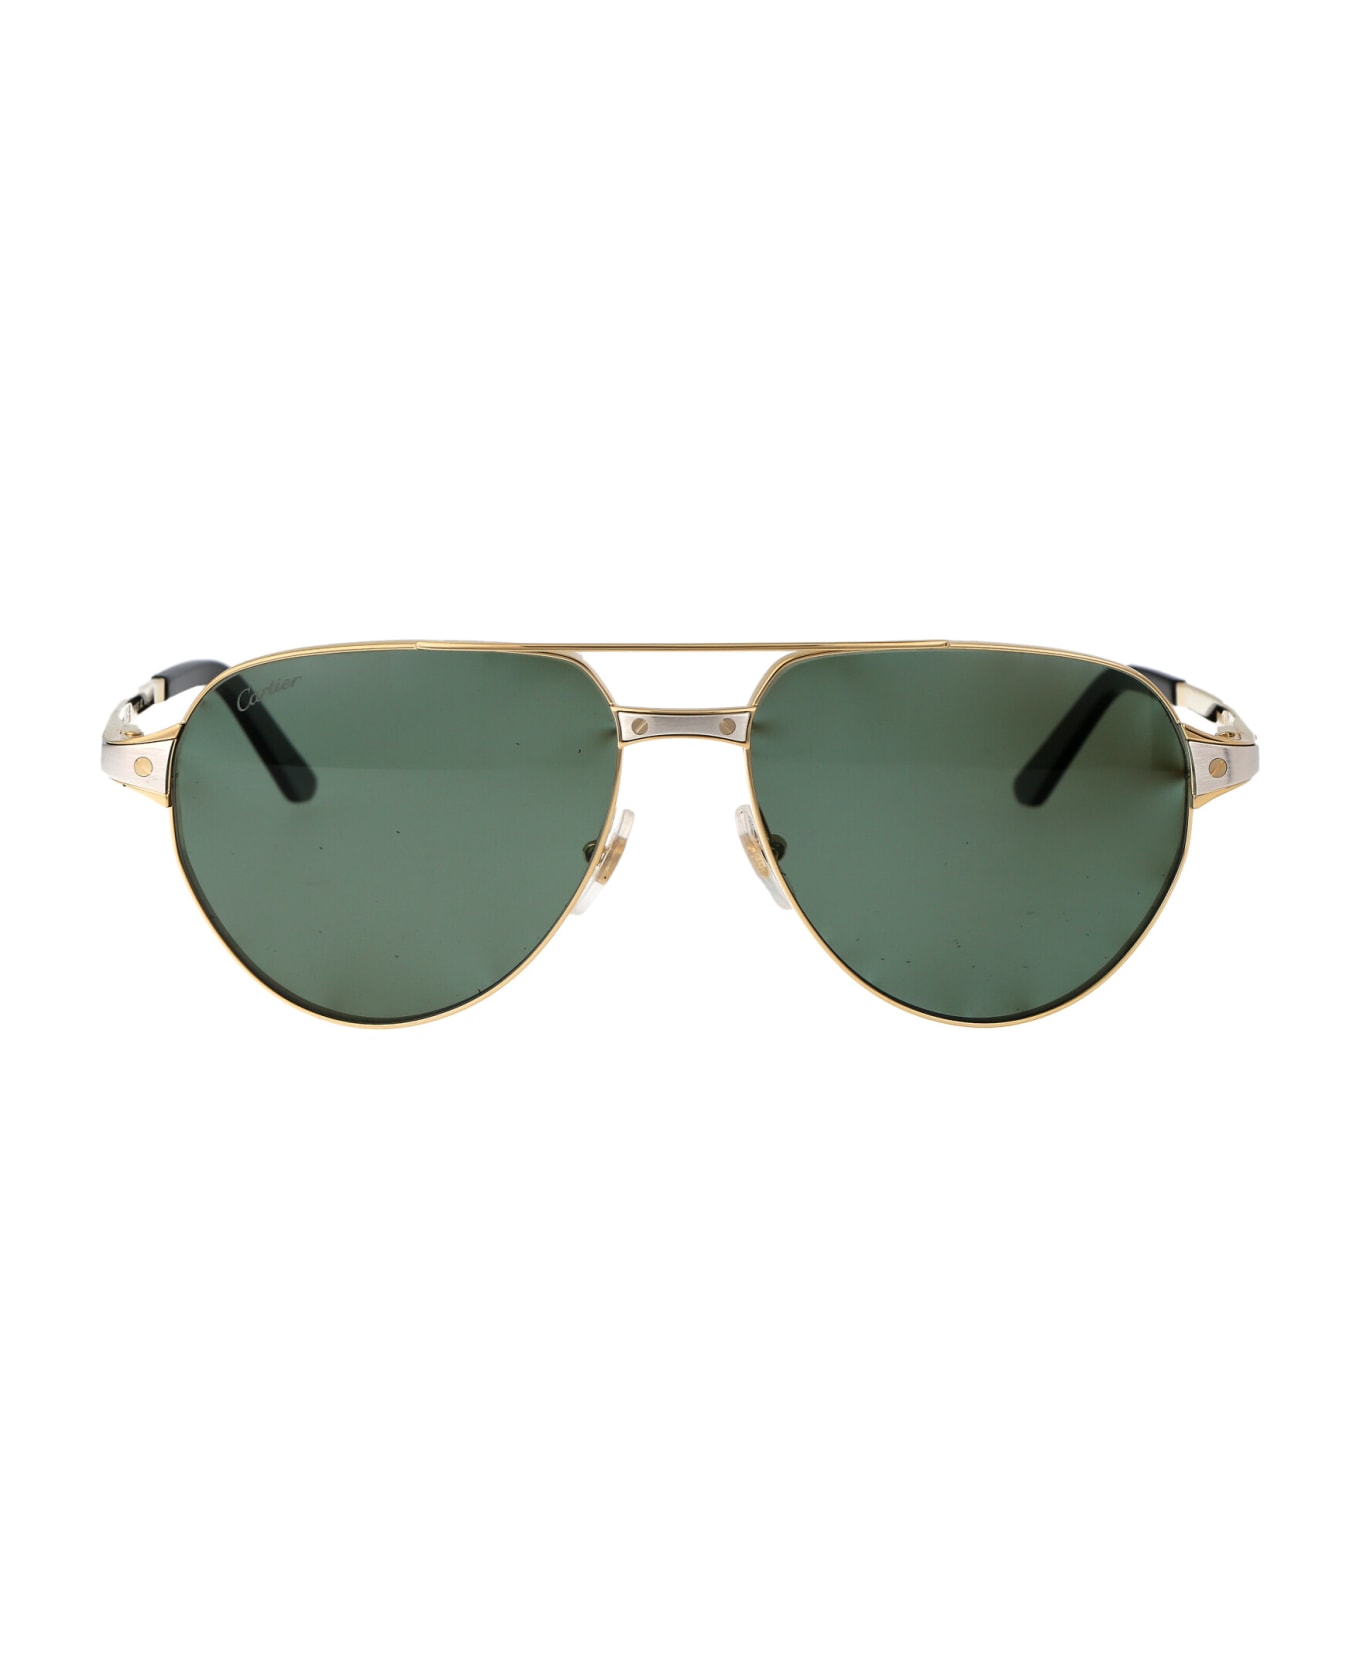 Cartier Eyewear Ct0425s Sunglasses - 002 GOLD GOLD GREEN サングラス